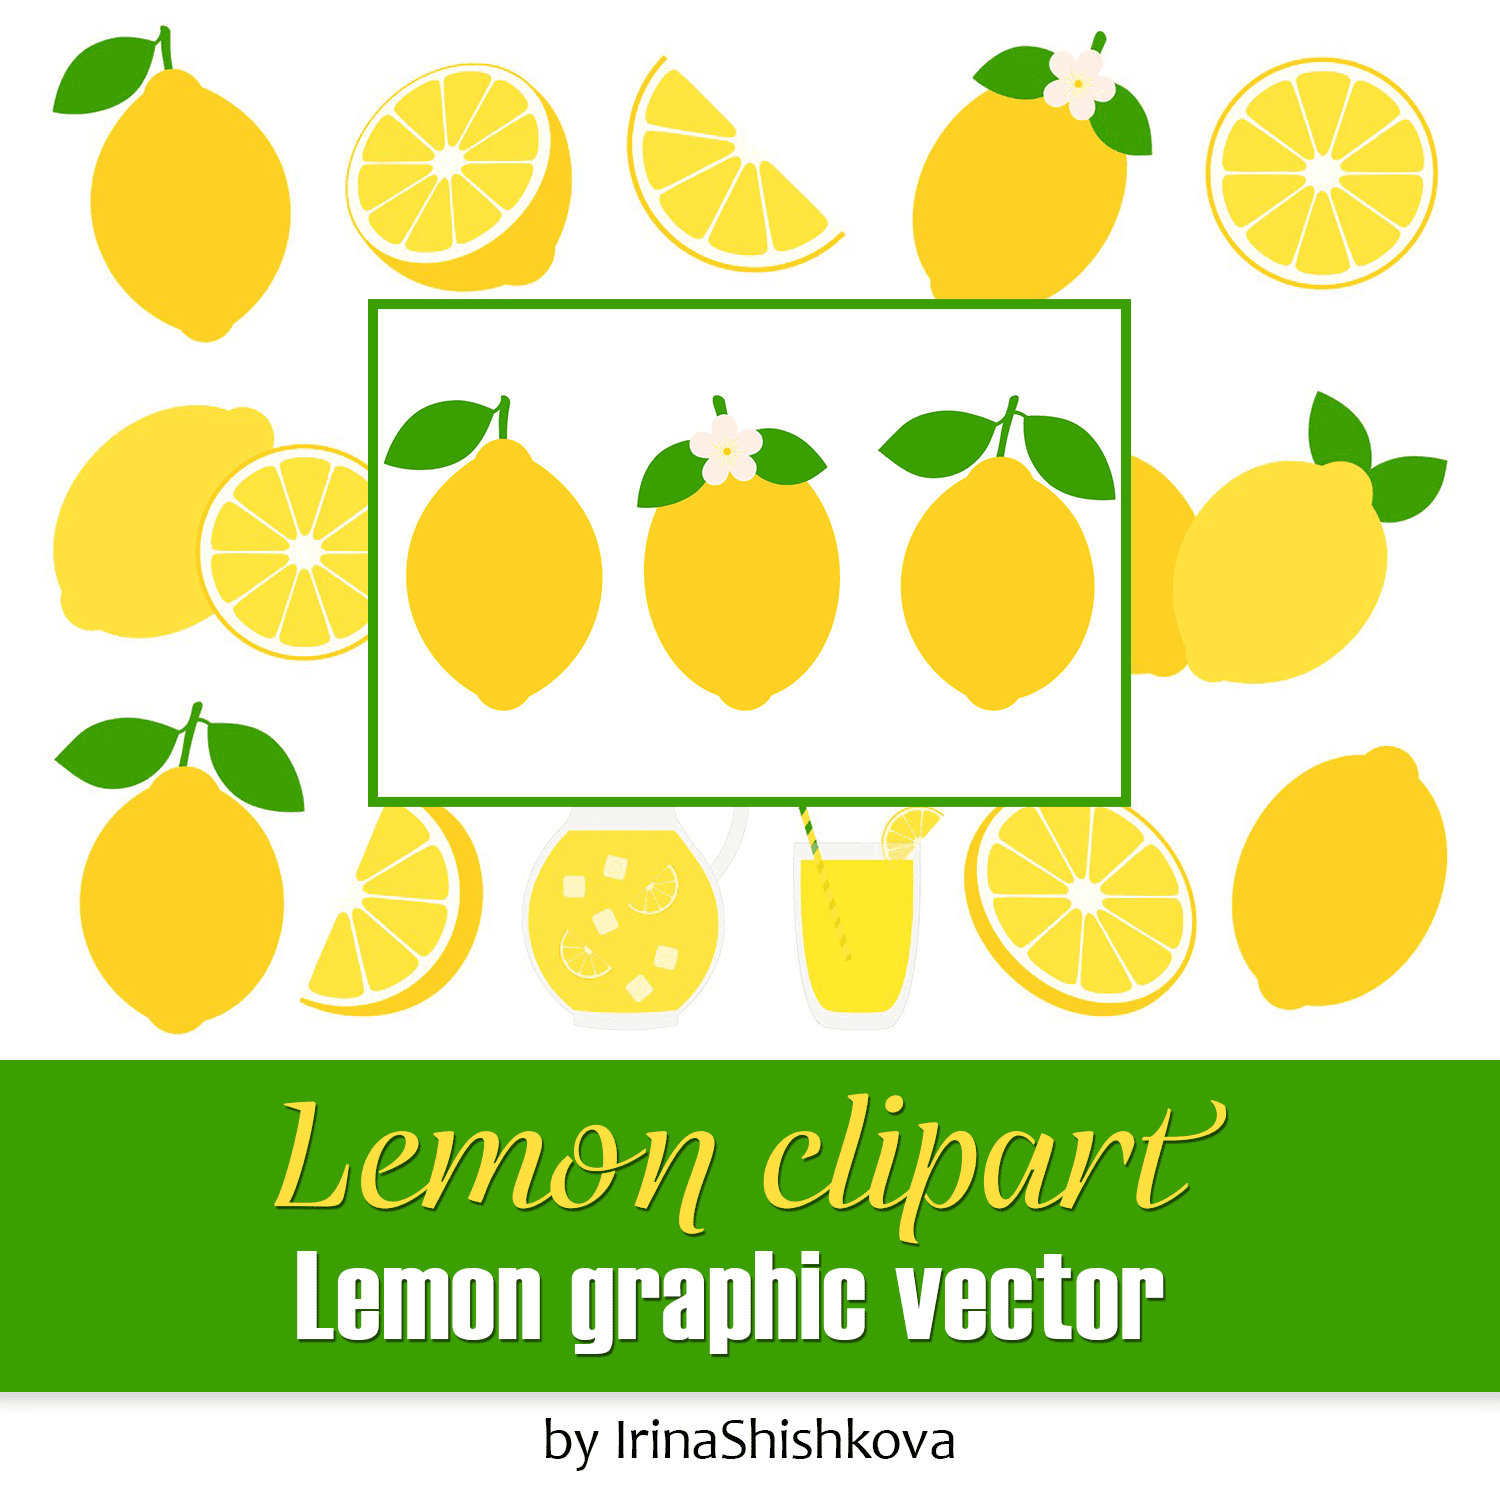 Lemon clipart. Lemon graphic vector cover.